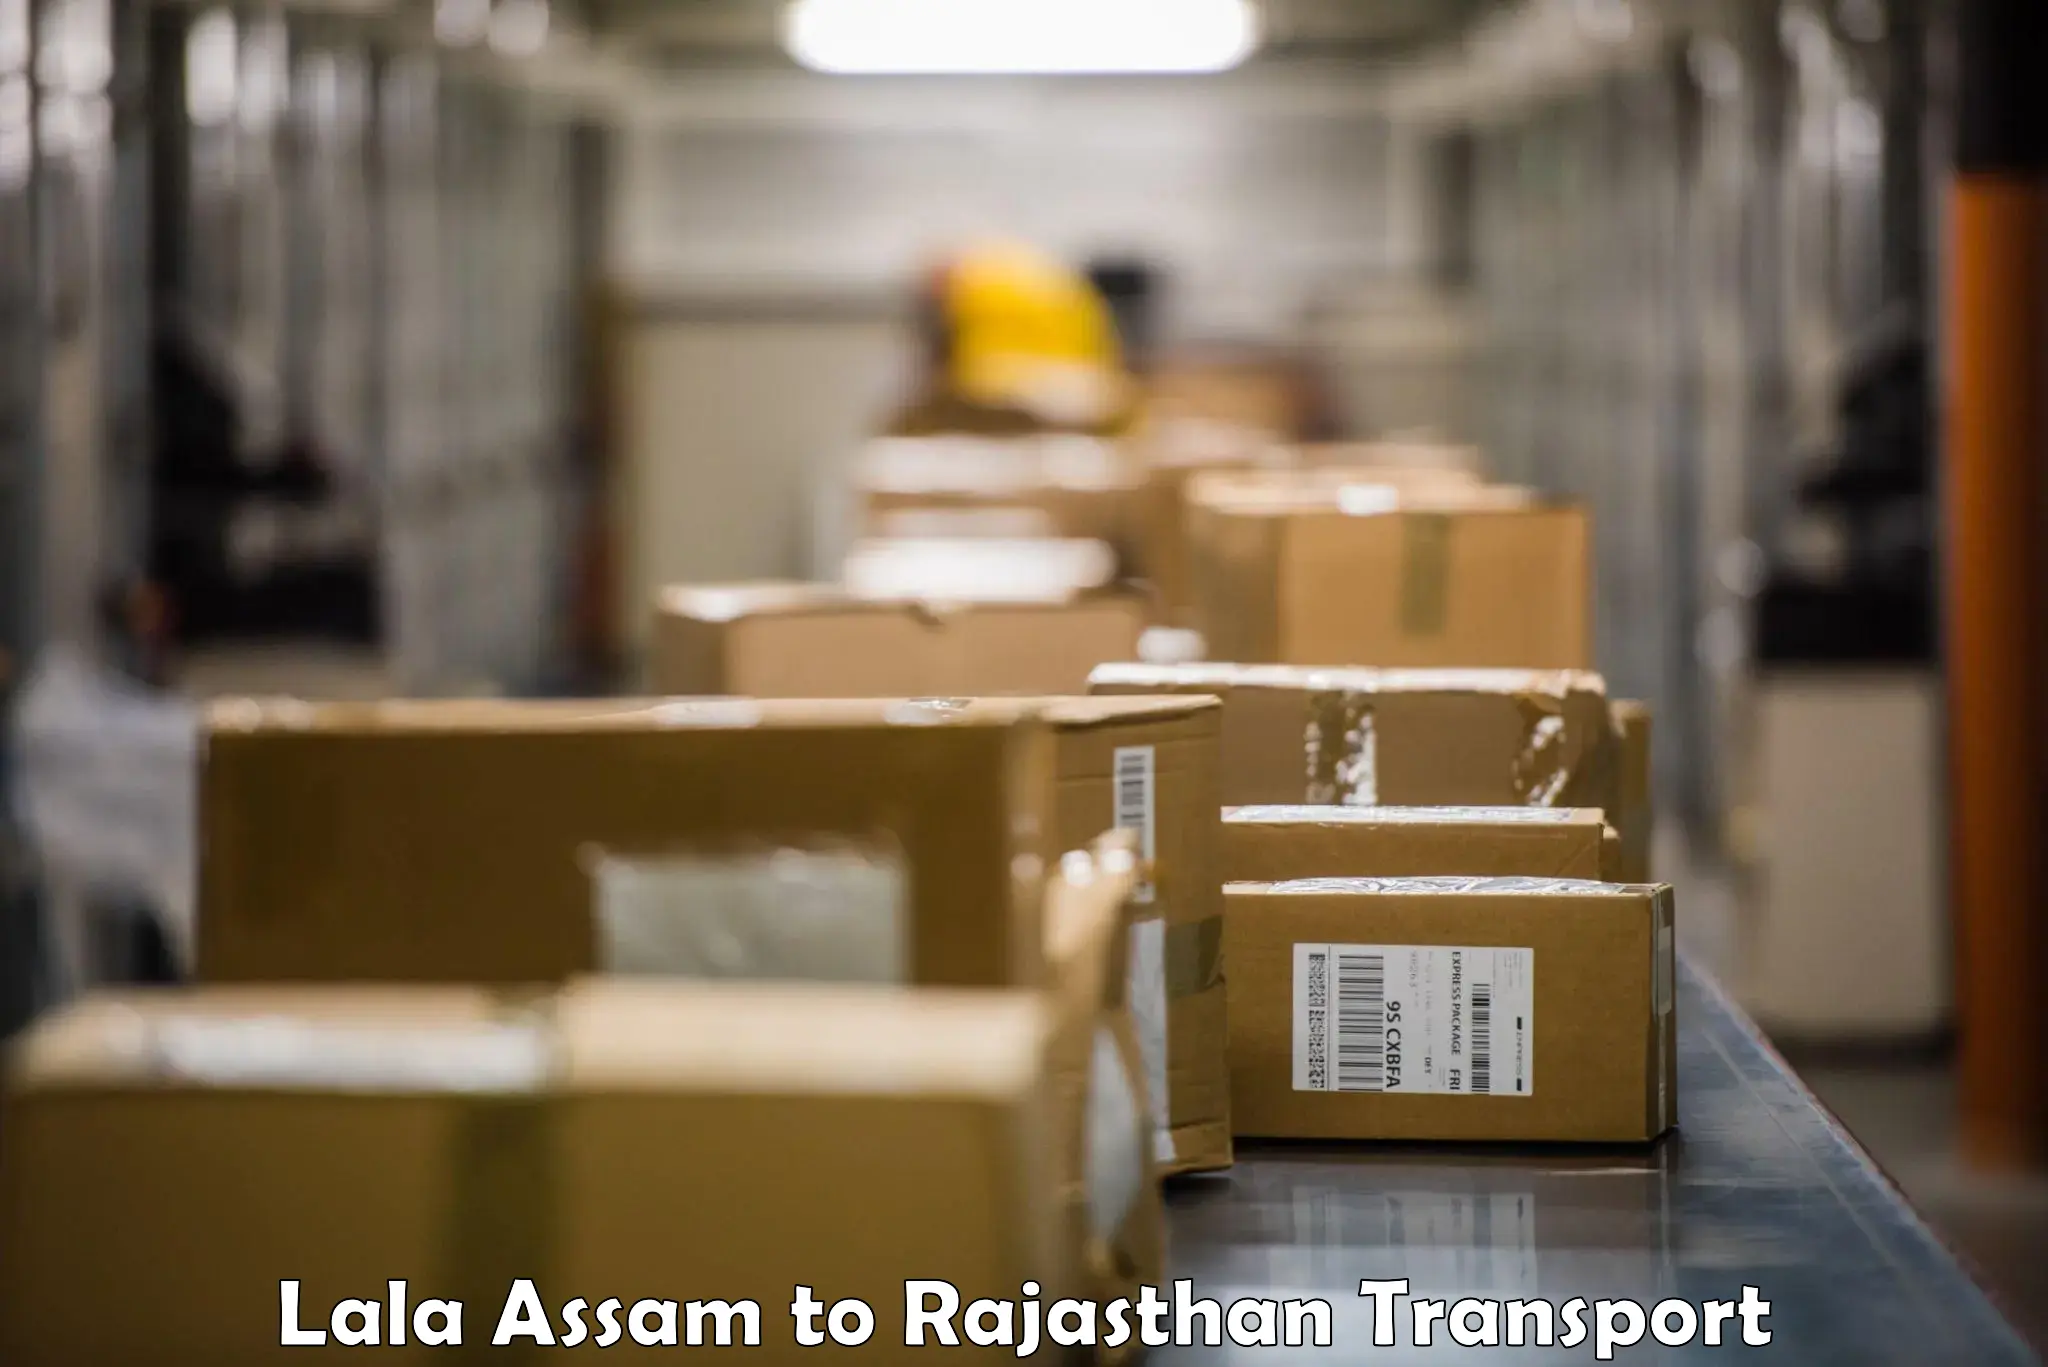 Delivery service Lala Assam to Makrana